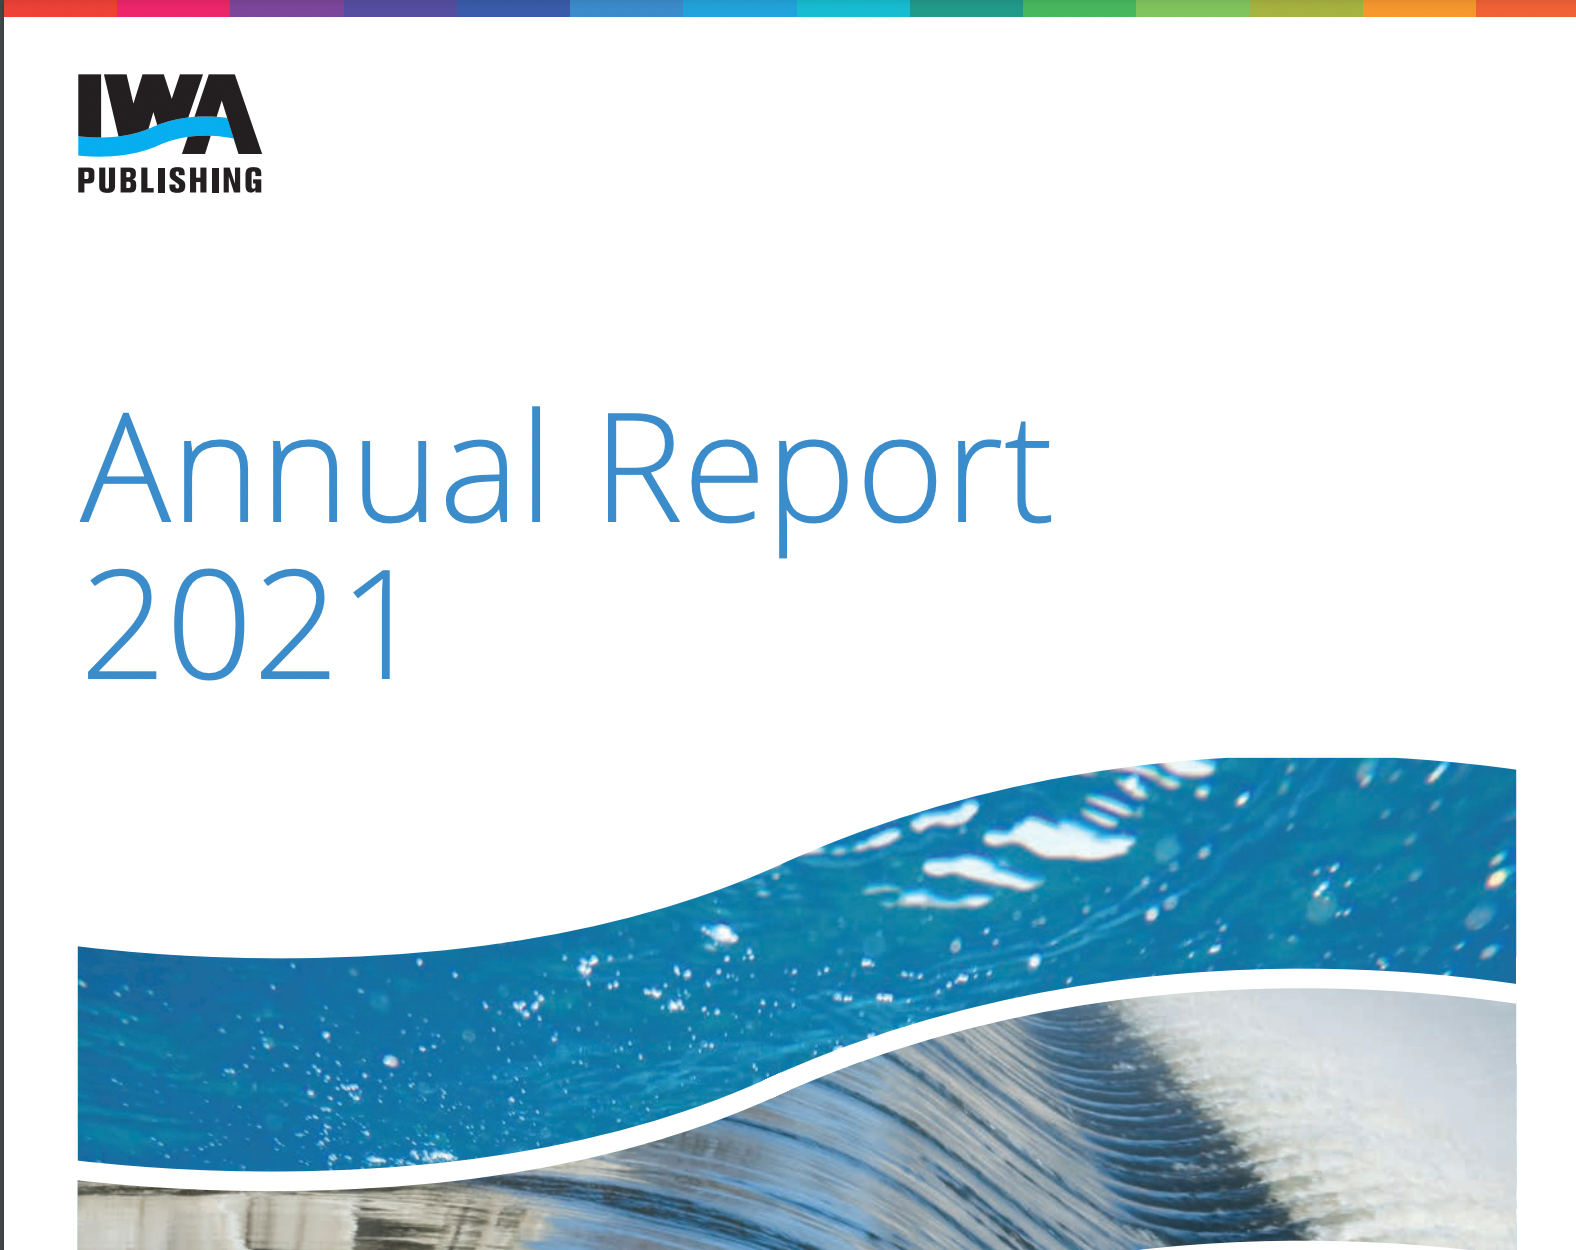 IWA Publishing Annual Report 2021